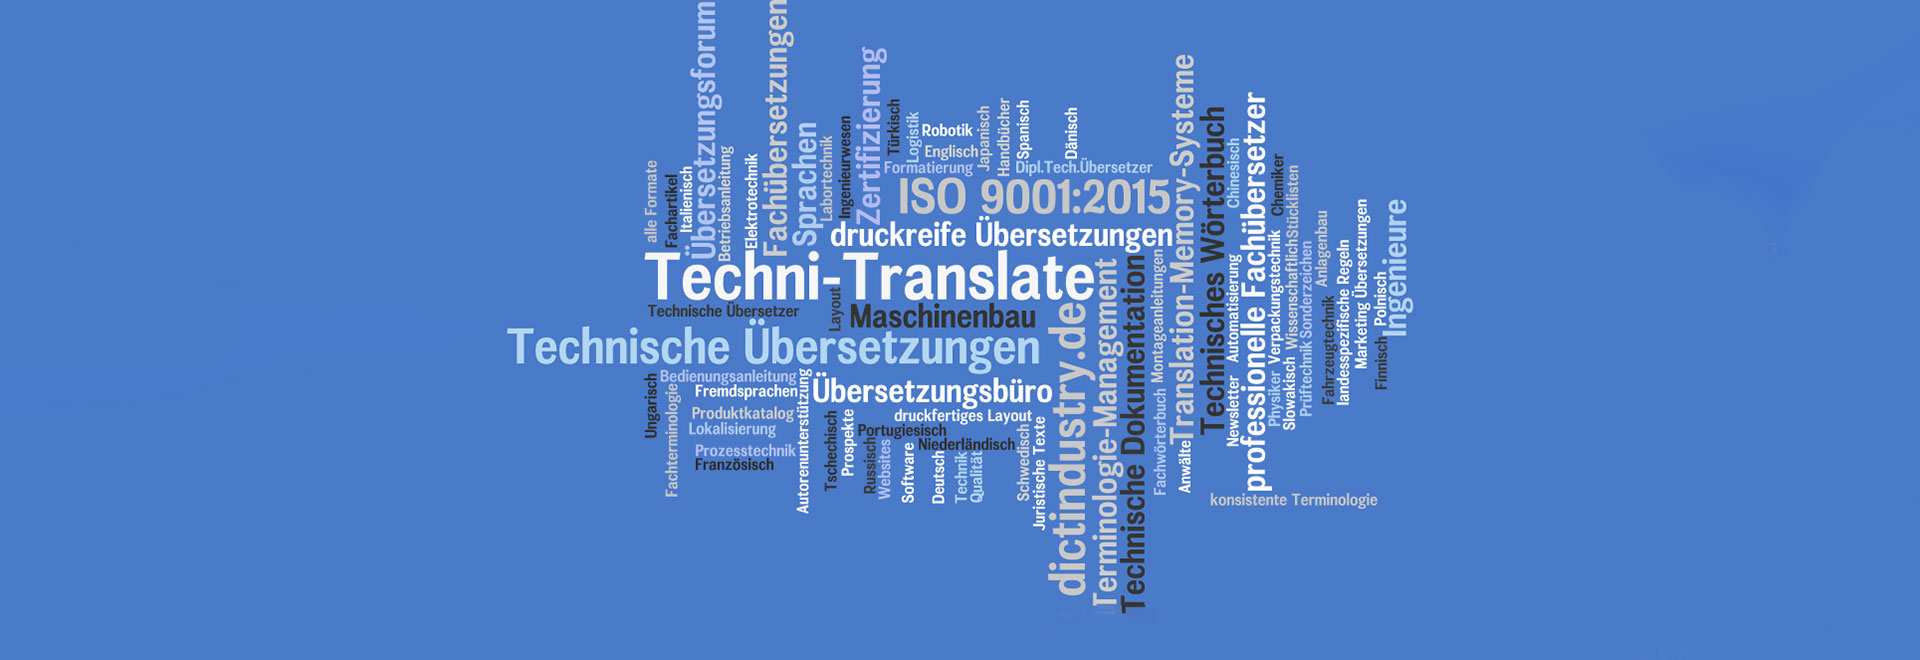 Professionelles Übersetzungsbüro Techni-Translate